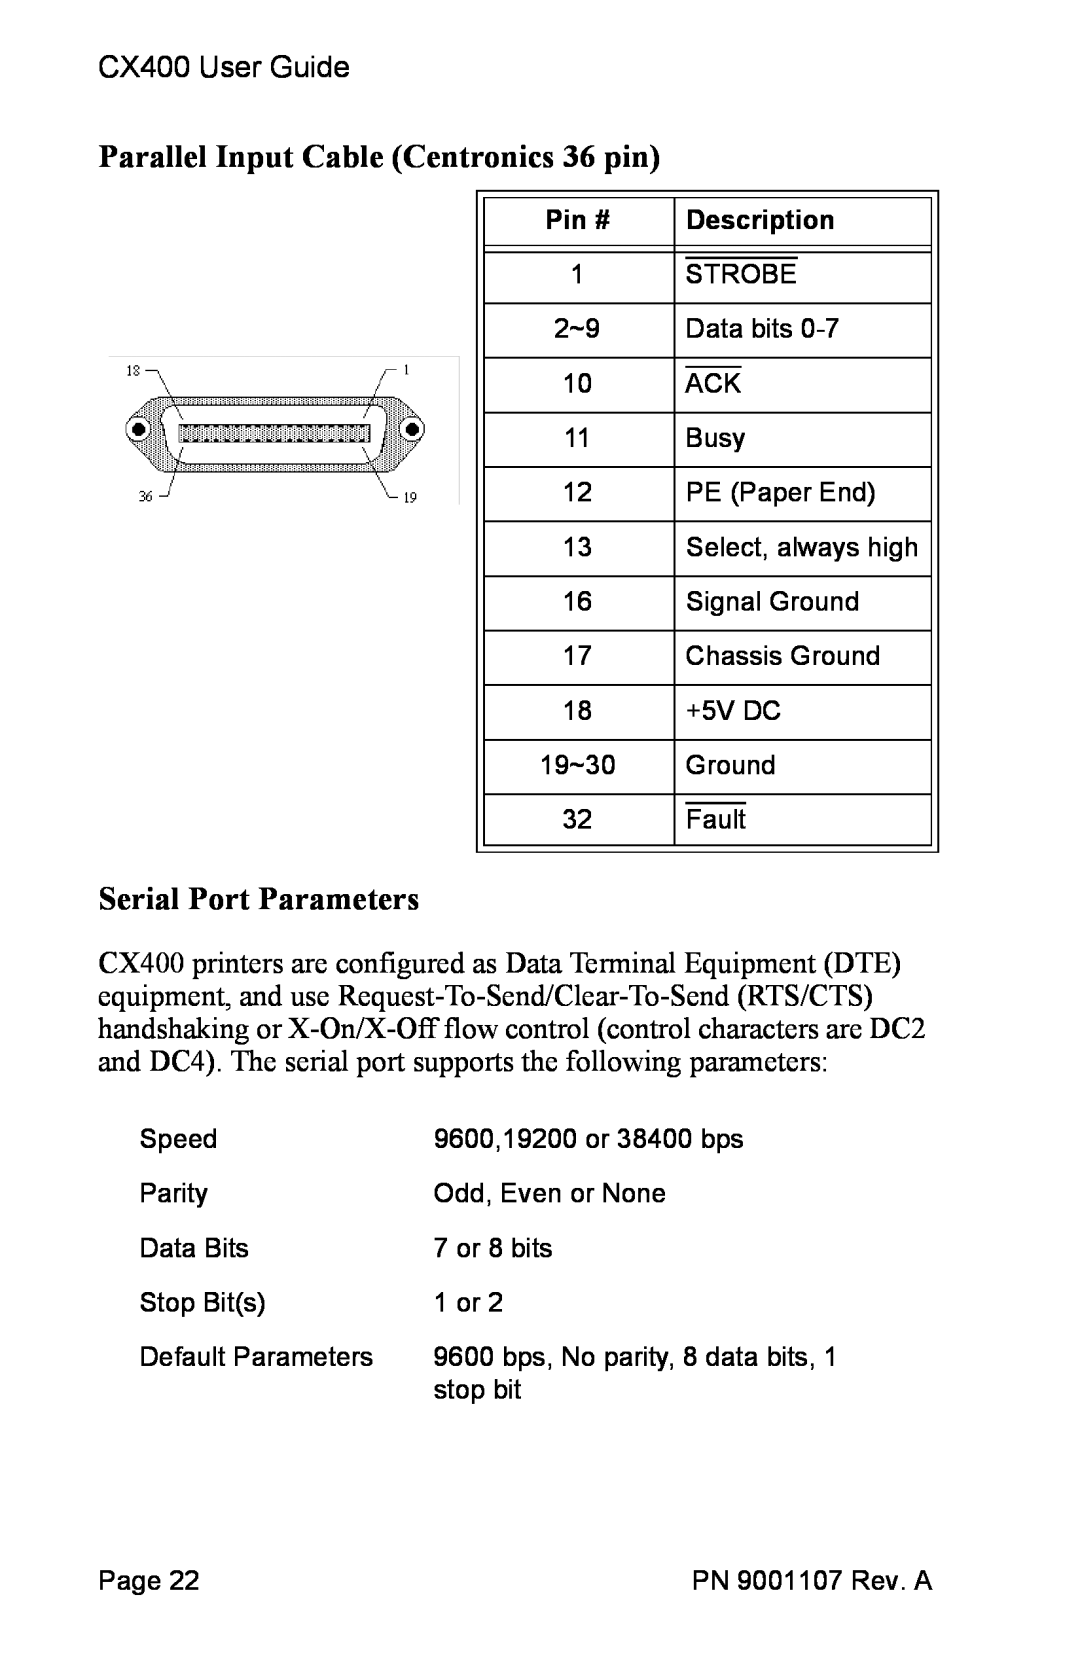 SATO 400 manual Parallel Input Cable Centronics 36 pin, Serial Port Parameters 